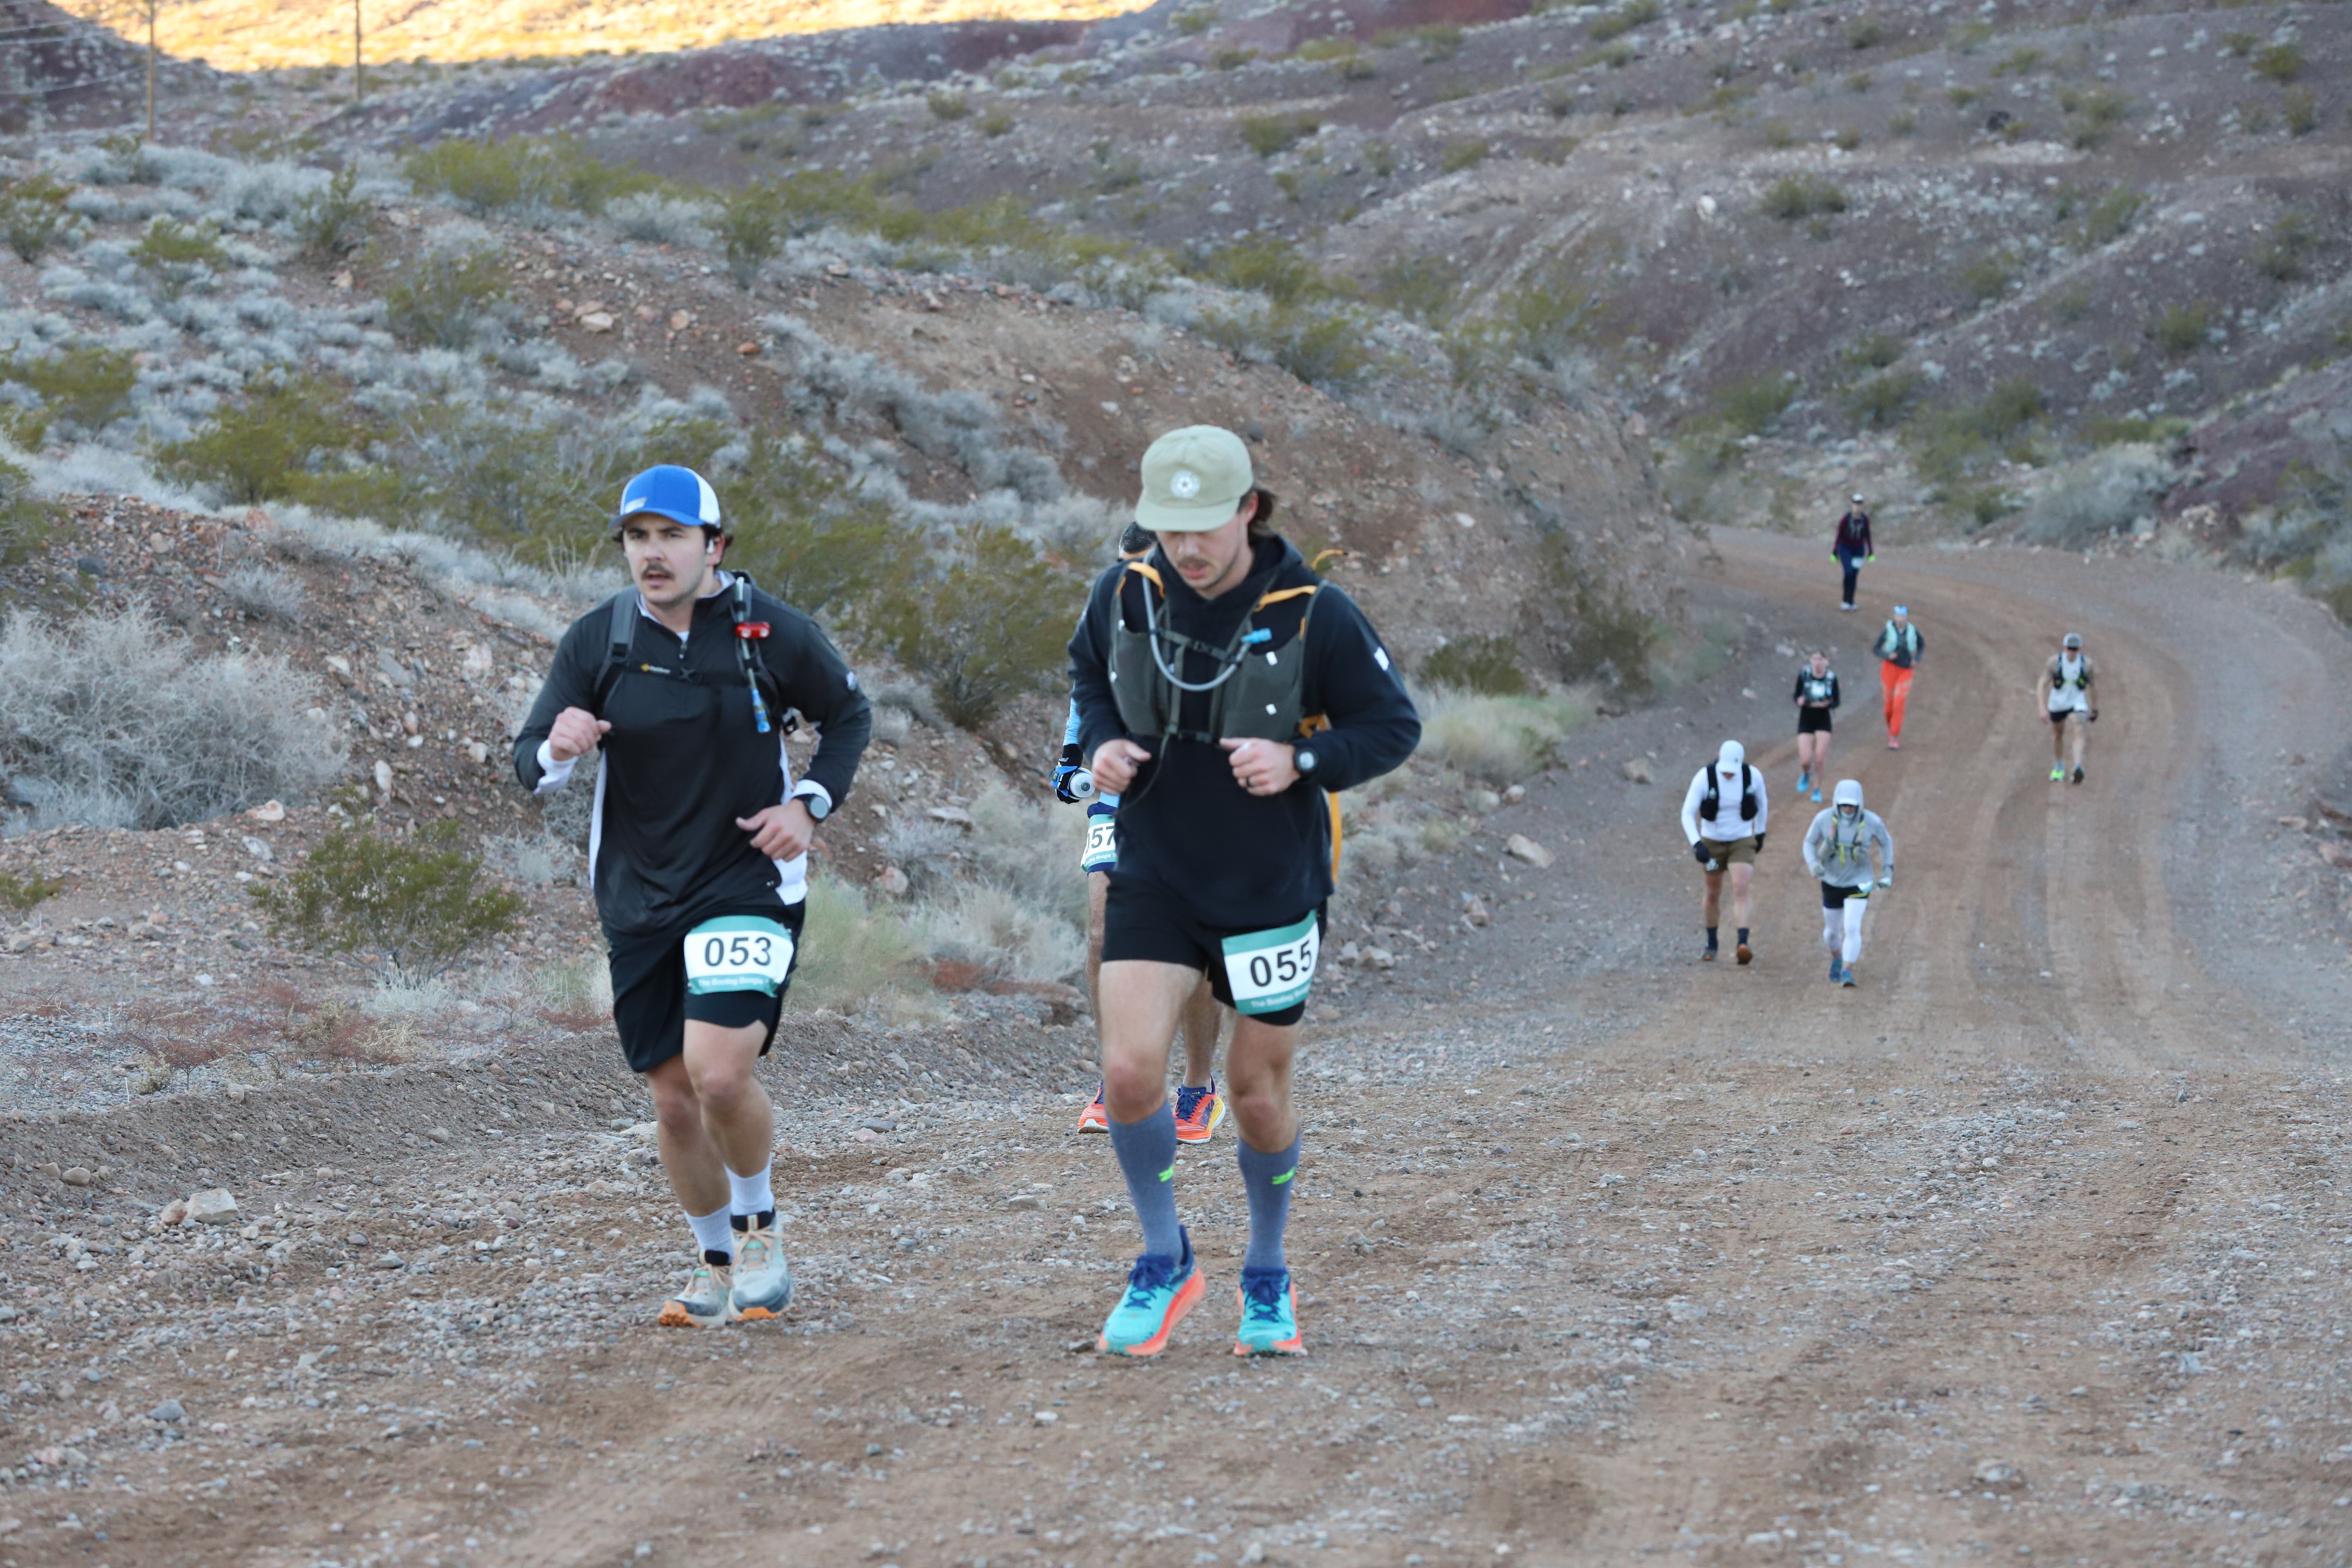 Trail runners running the bootleg boogie in the Mojave desert, Nevada.